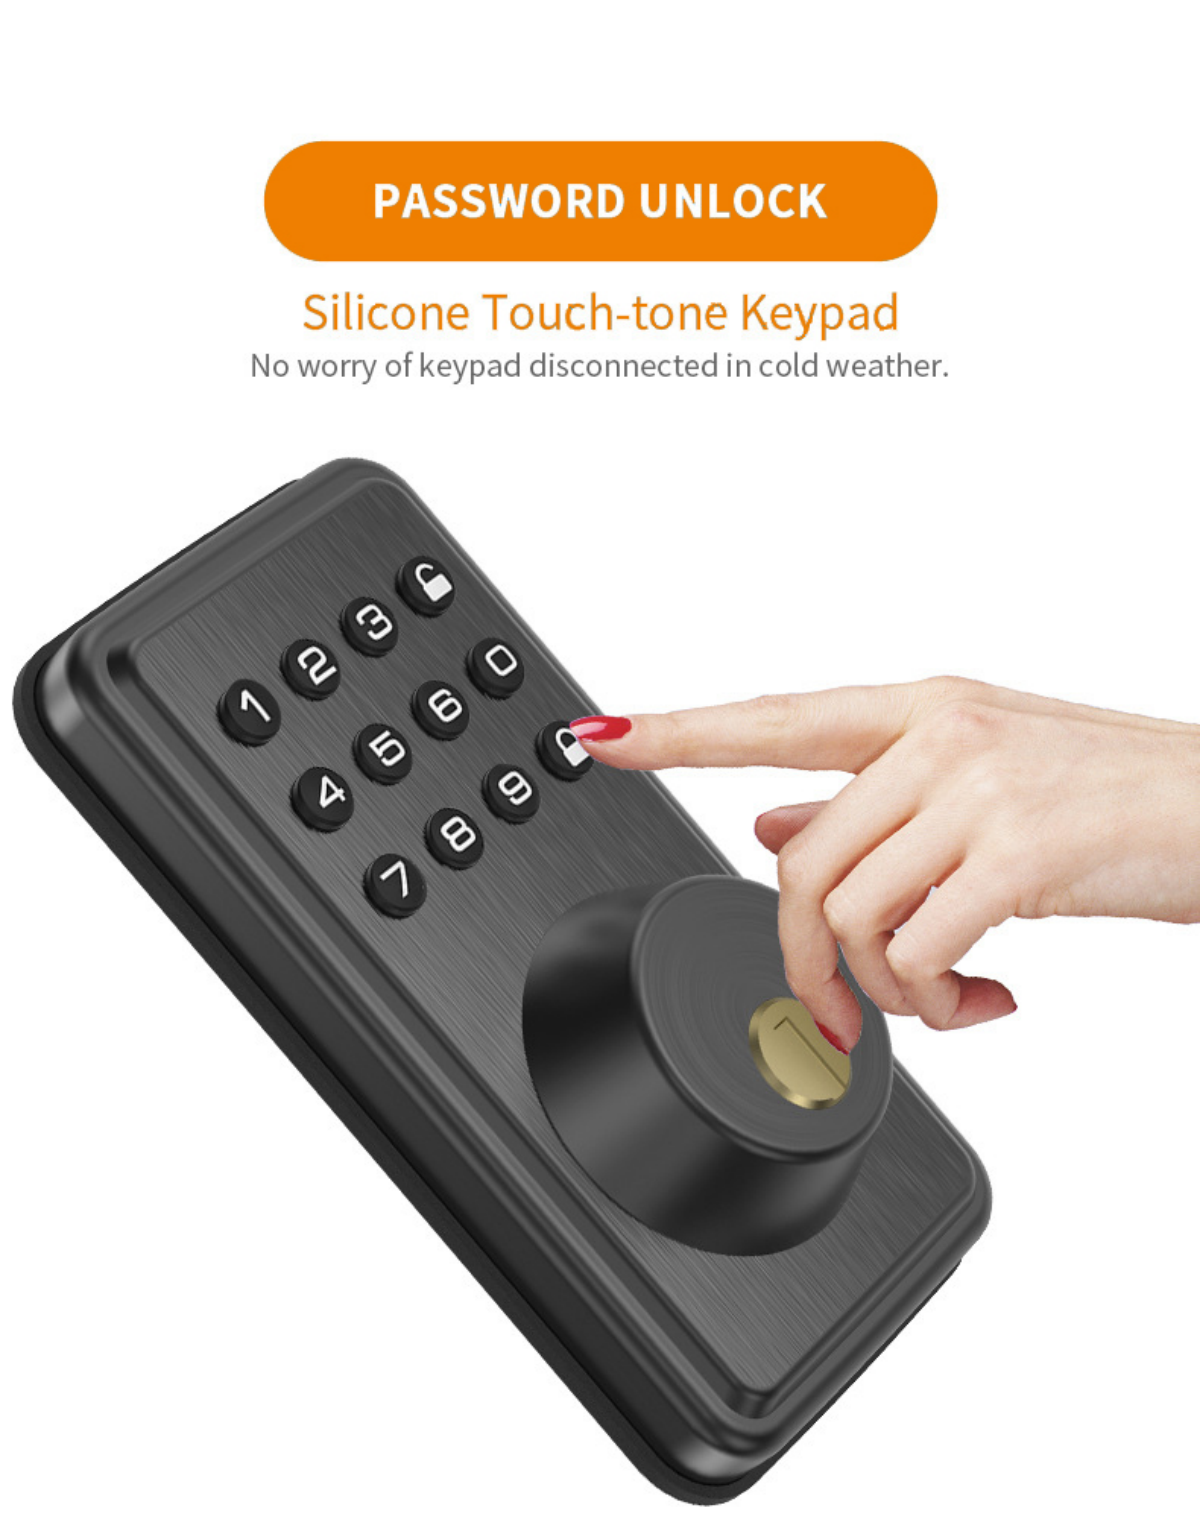 Password Unlock